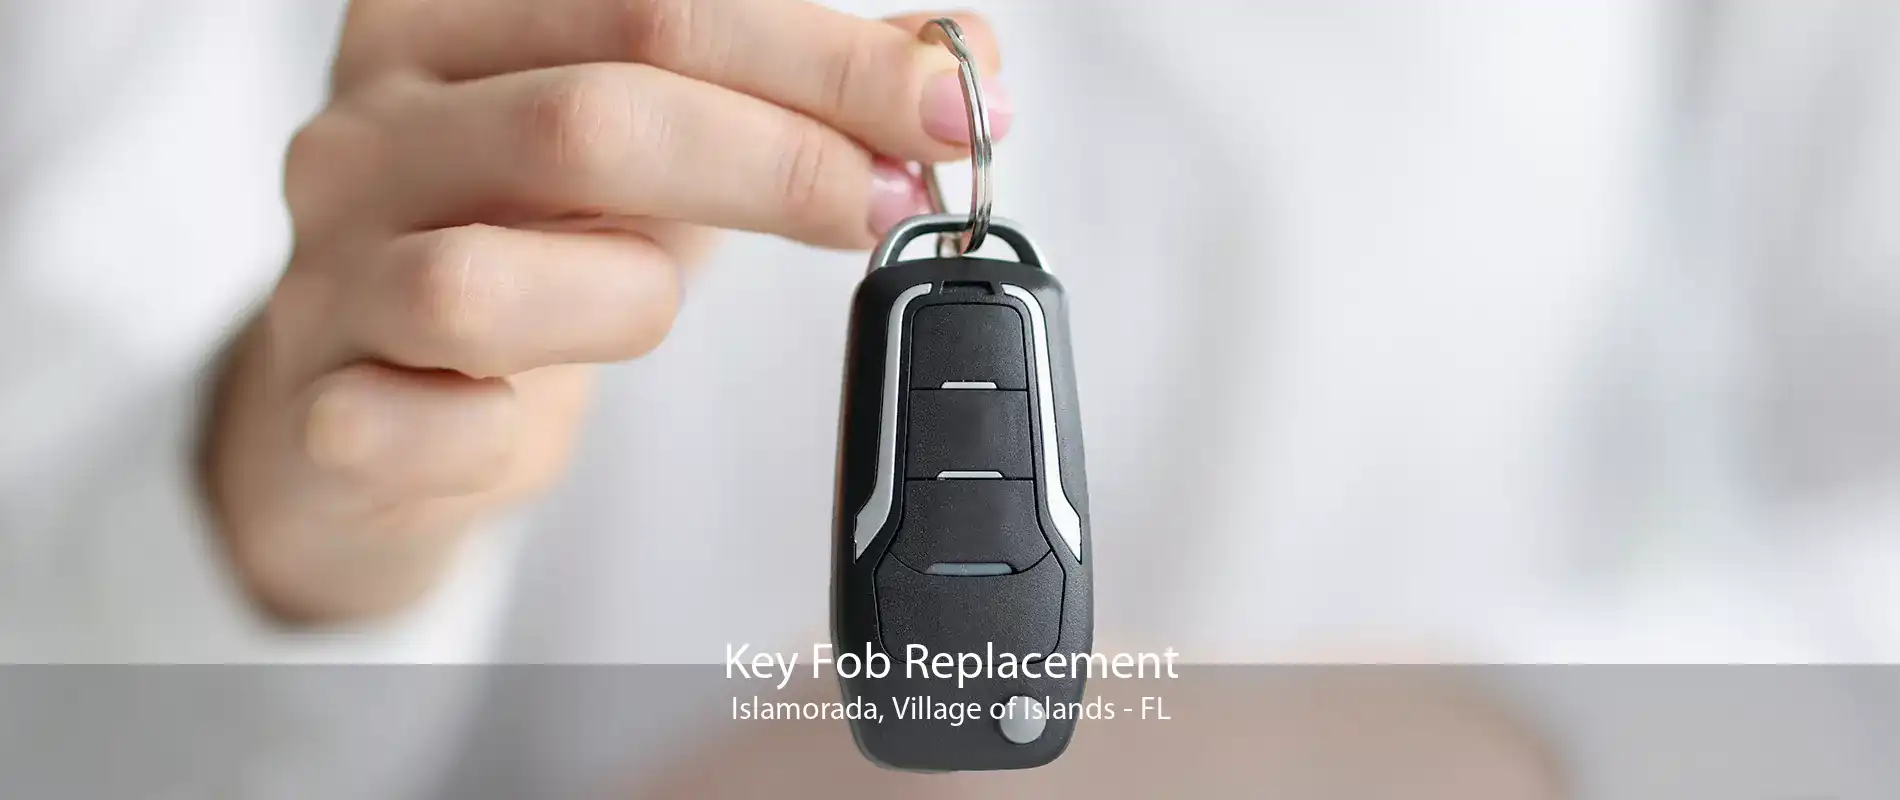 Key Fob Replacement Islamorada, Village of Islands - FL